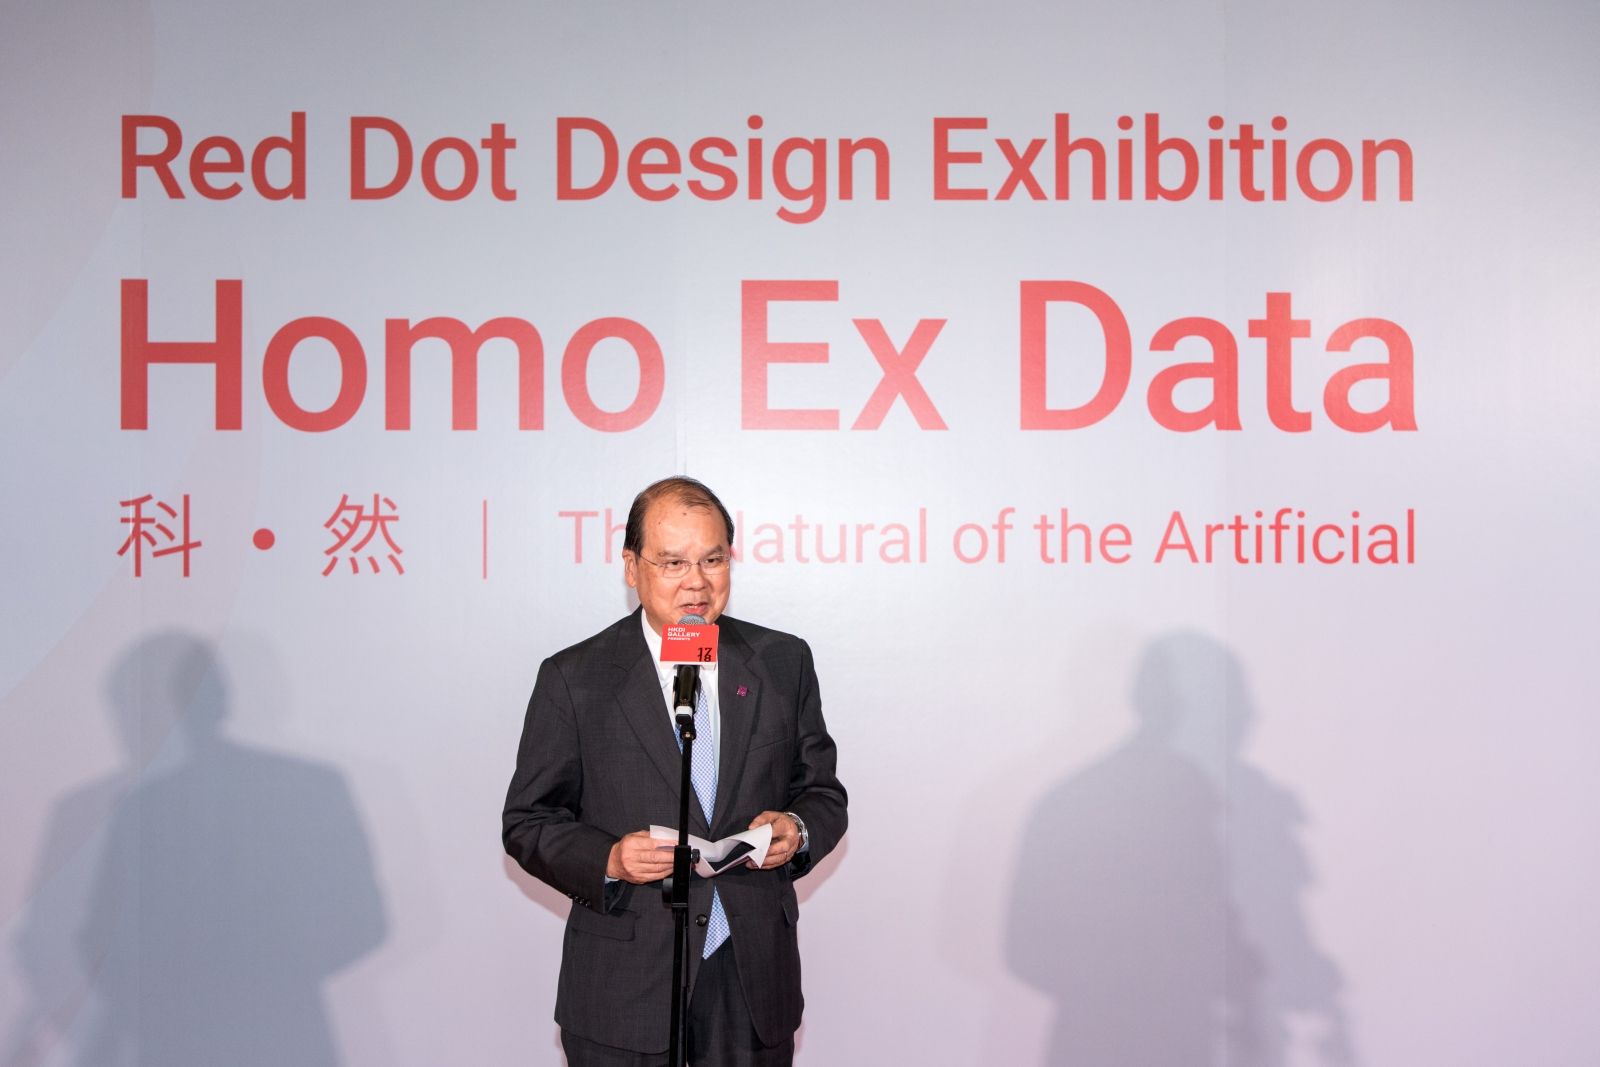 HKDI Gallery Presents紅點設計《科 • 然》主題展覽
【Homo Ex Data – The Natural of the Artificial】
 邁向未來數碼時代的科技創新與影響